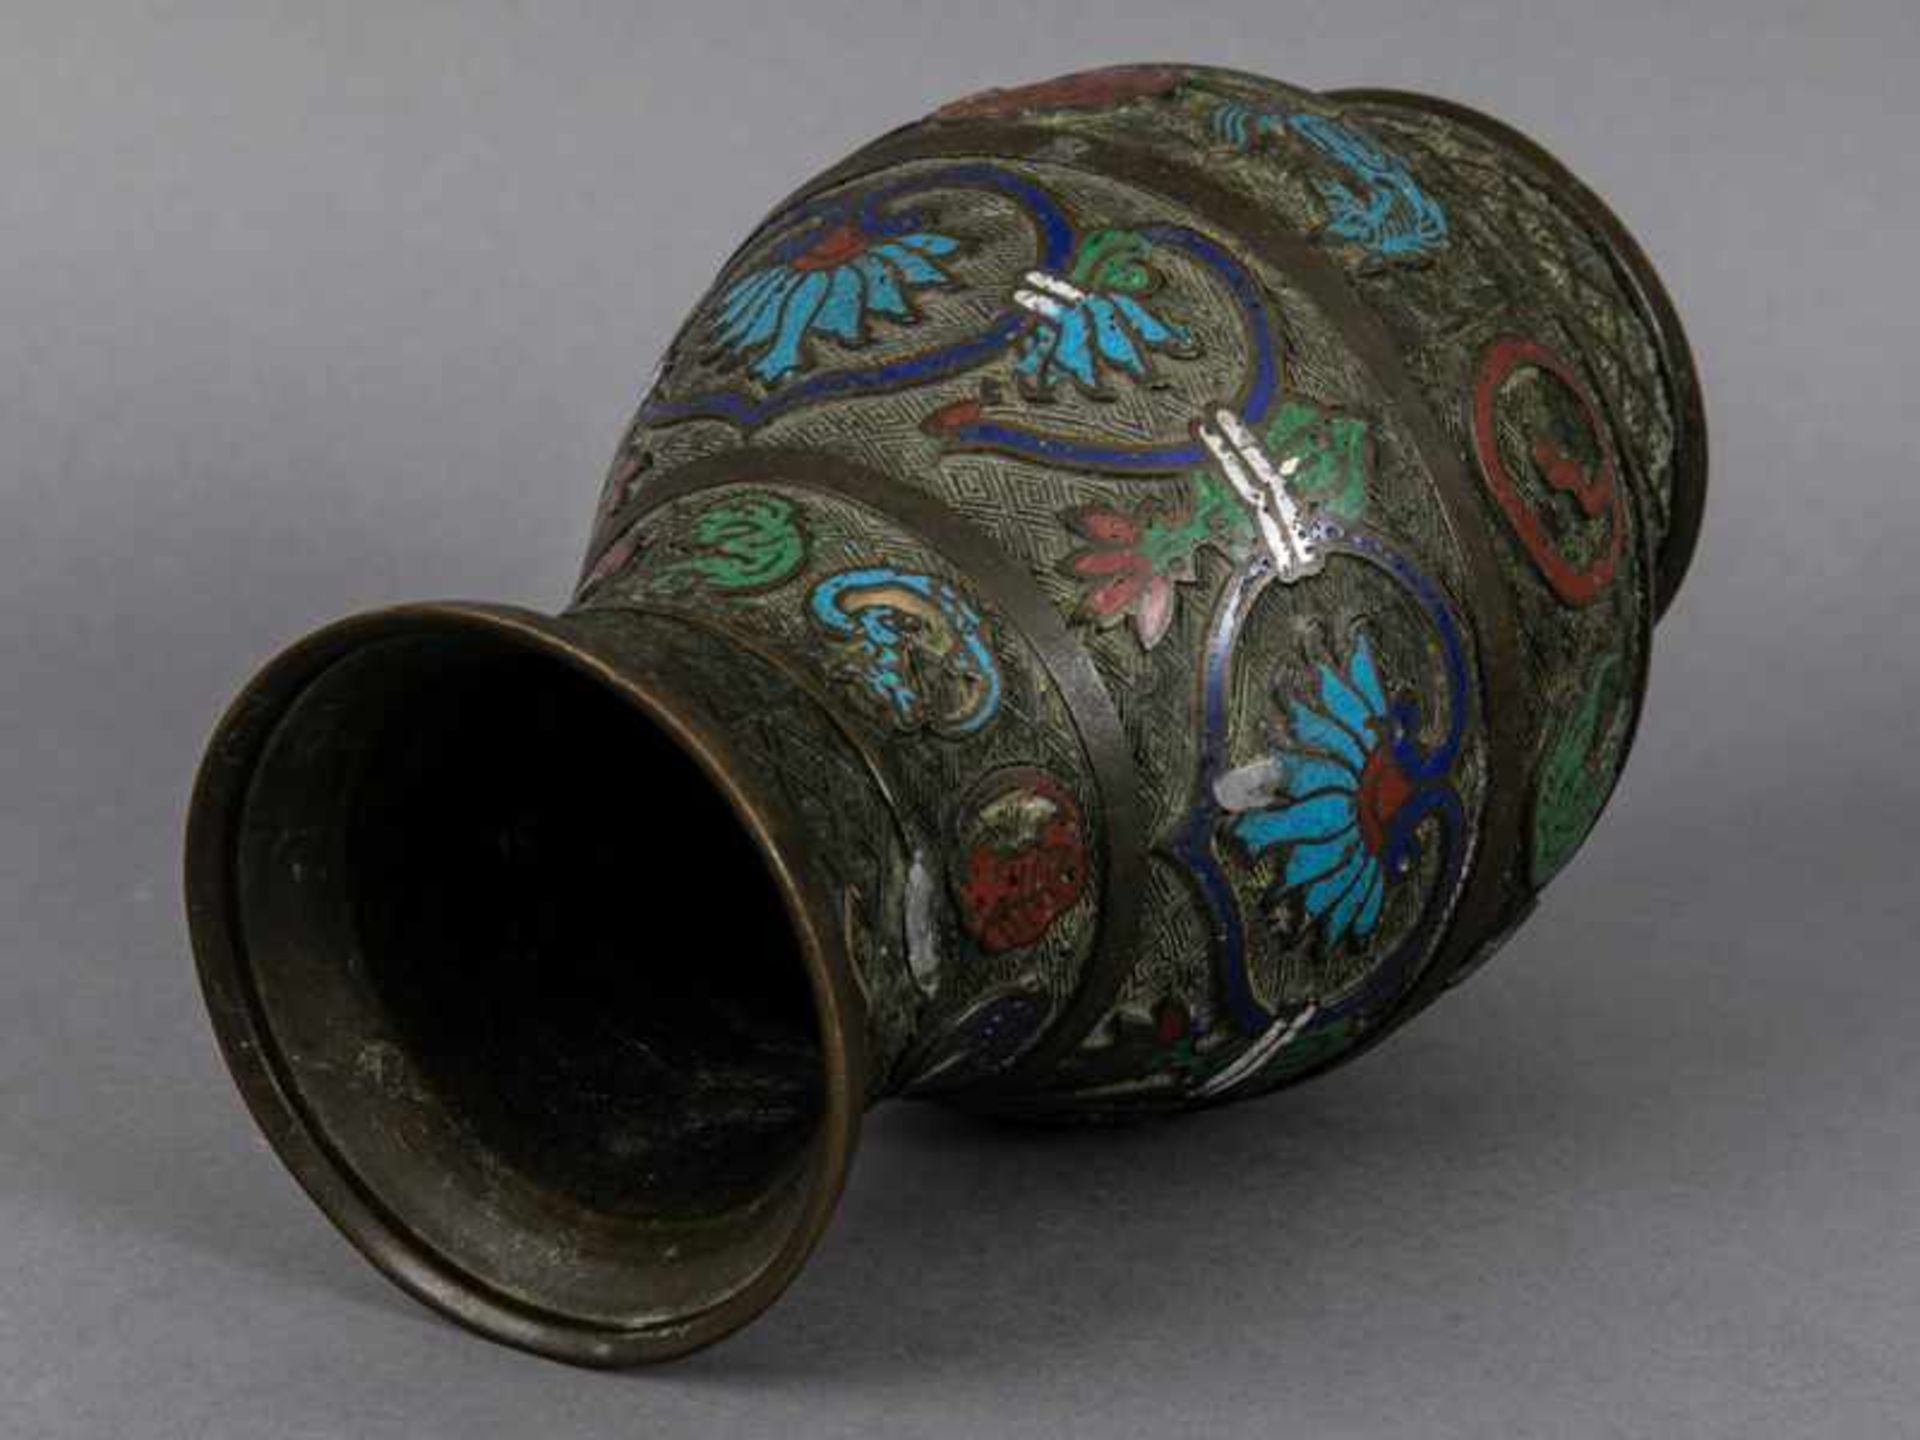 Vase mit Emaille-Cloisonné-Dekor, China, wohl 19. Jh. Vase mit Emaille-Cloisonné-Dekor, China, wohl - Image 3 of 4